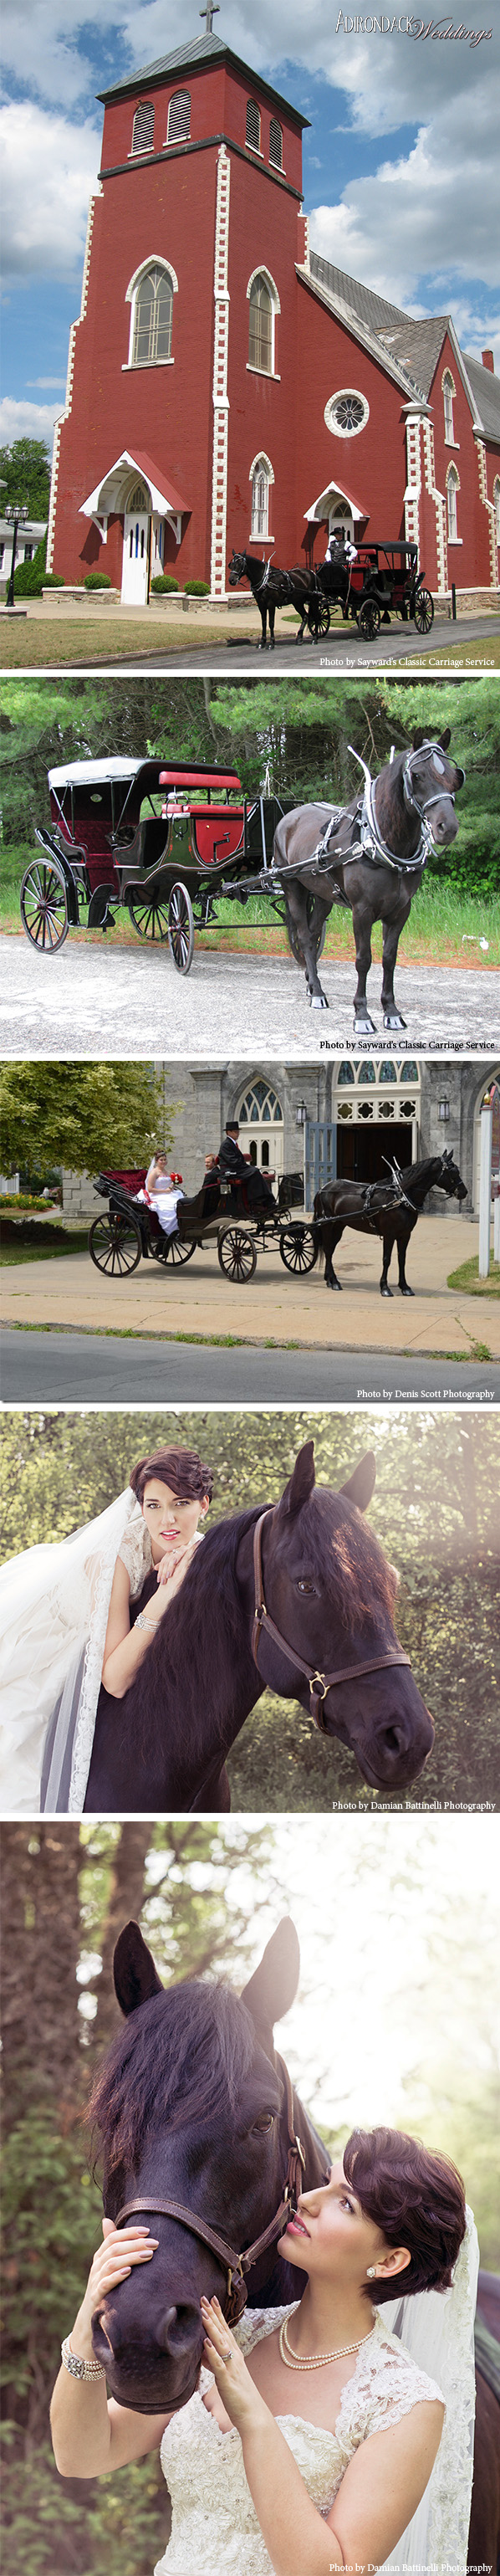 Sayward's Classic Carriage Service | Adirondack Weddings Magazine